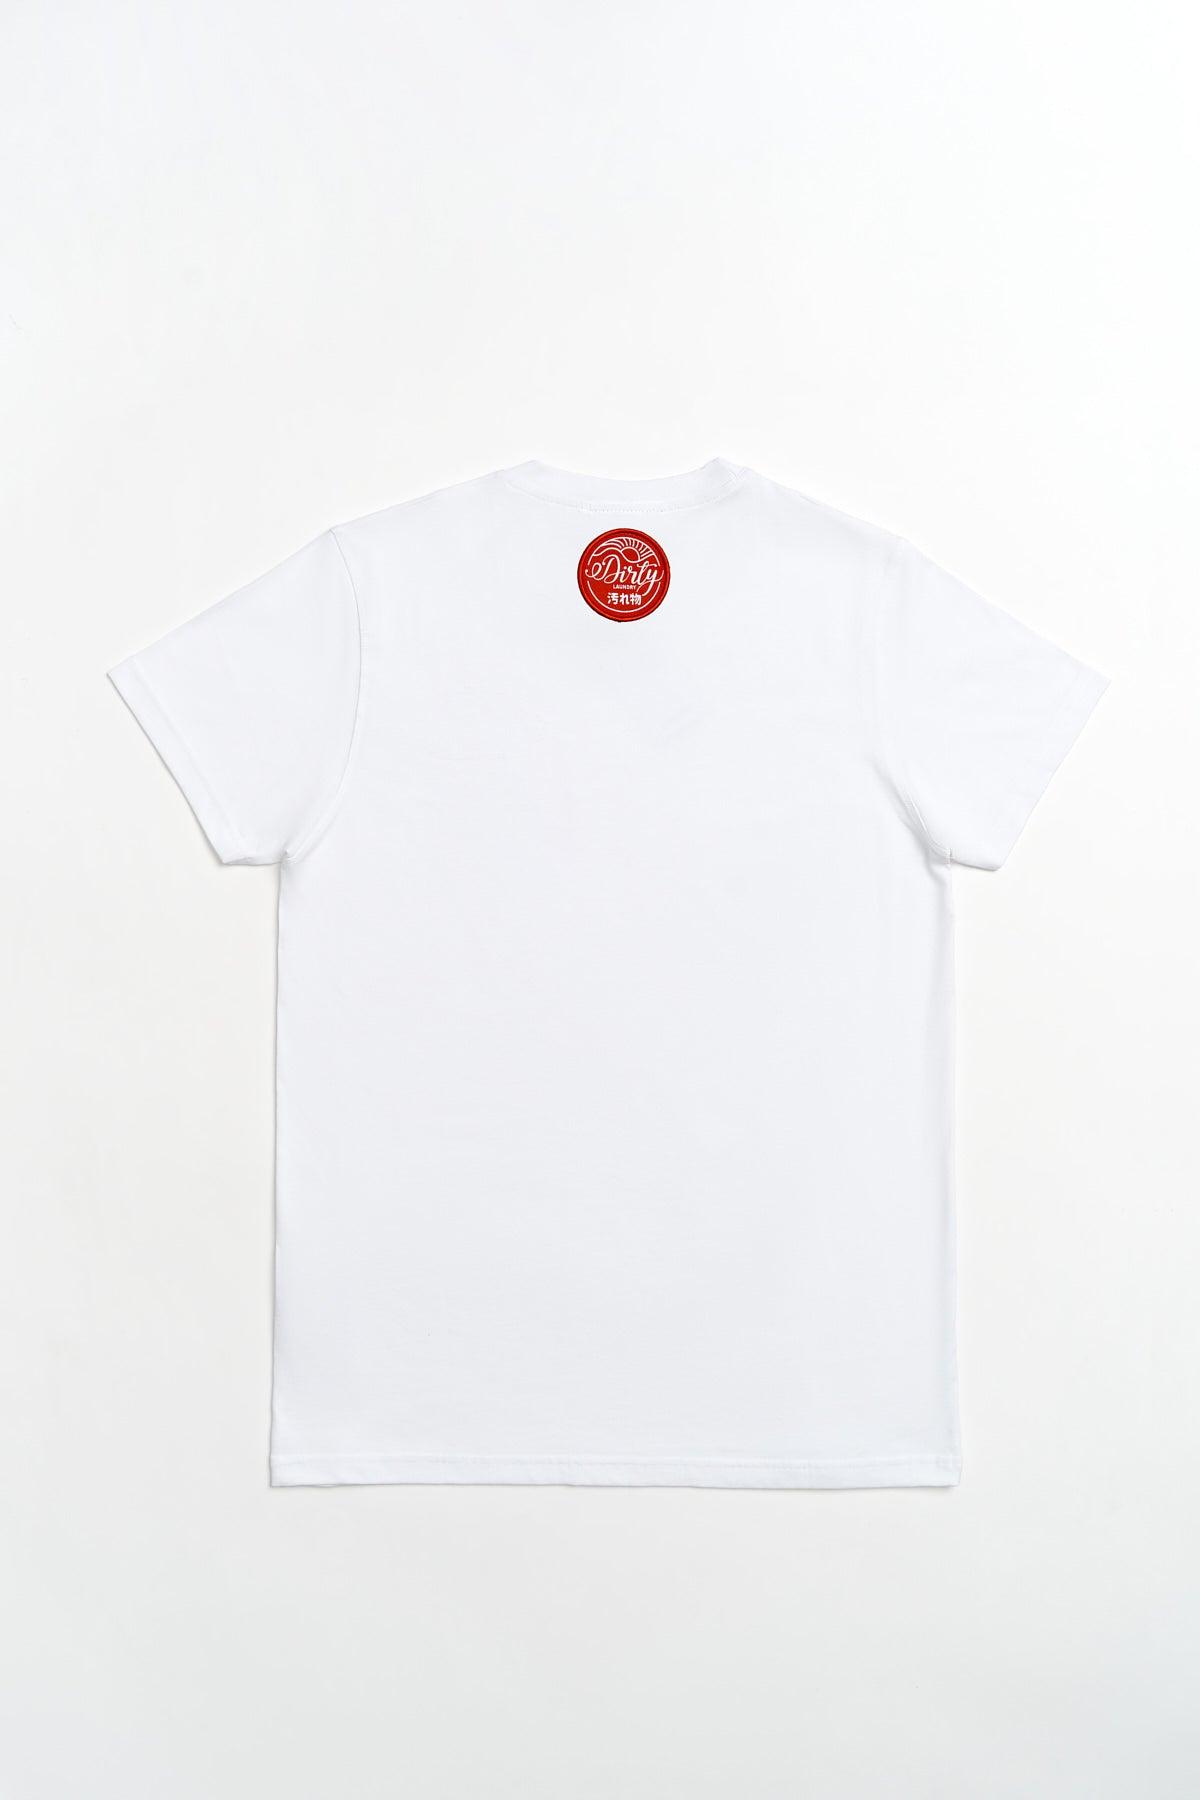 Dirty Laundry Tokyo Splits Supima Cotton T-shirt